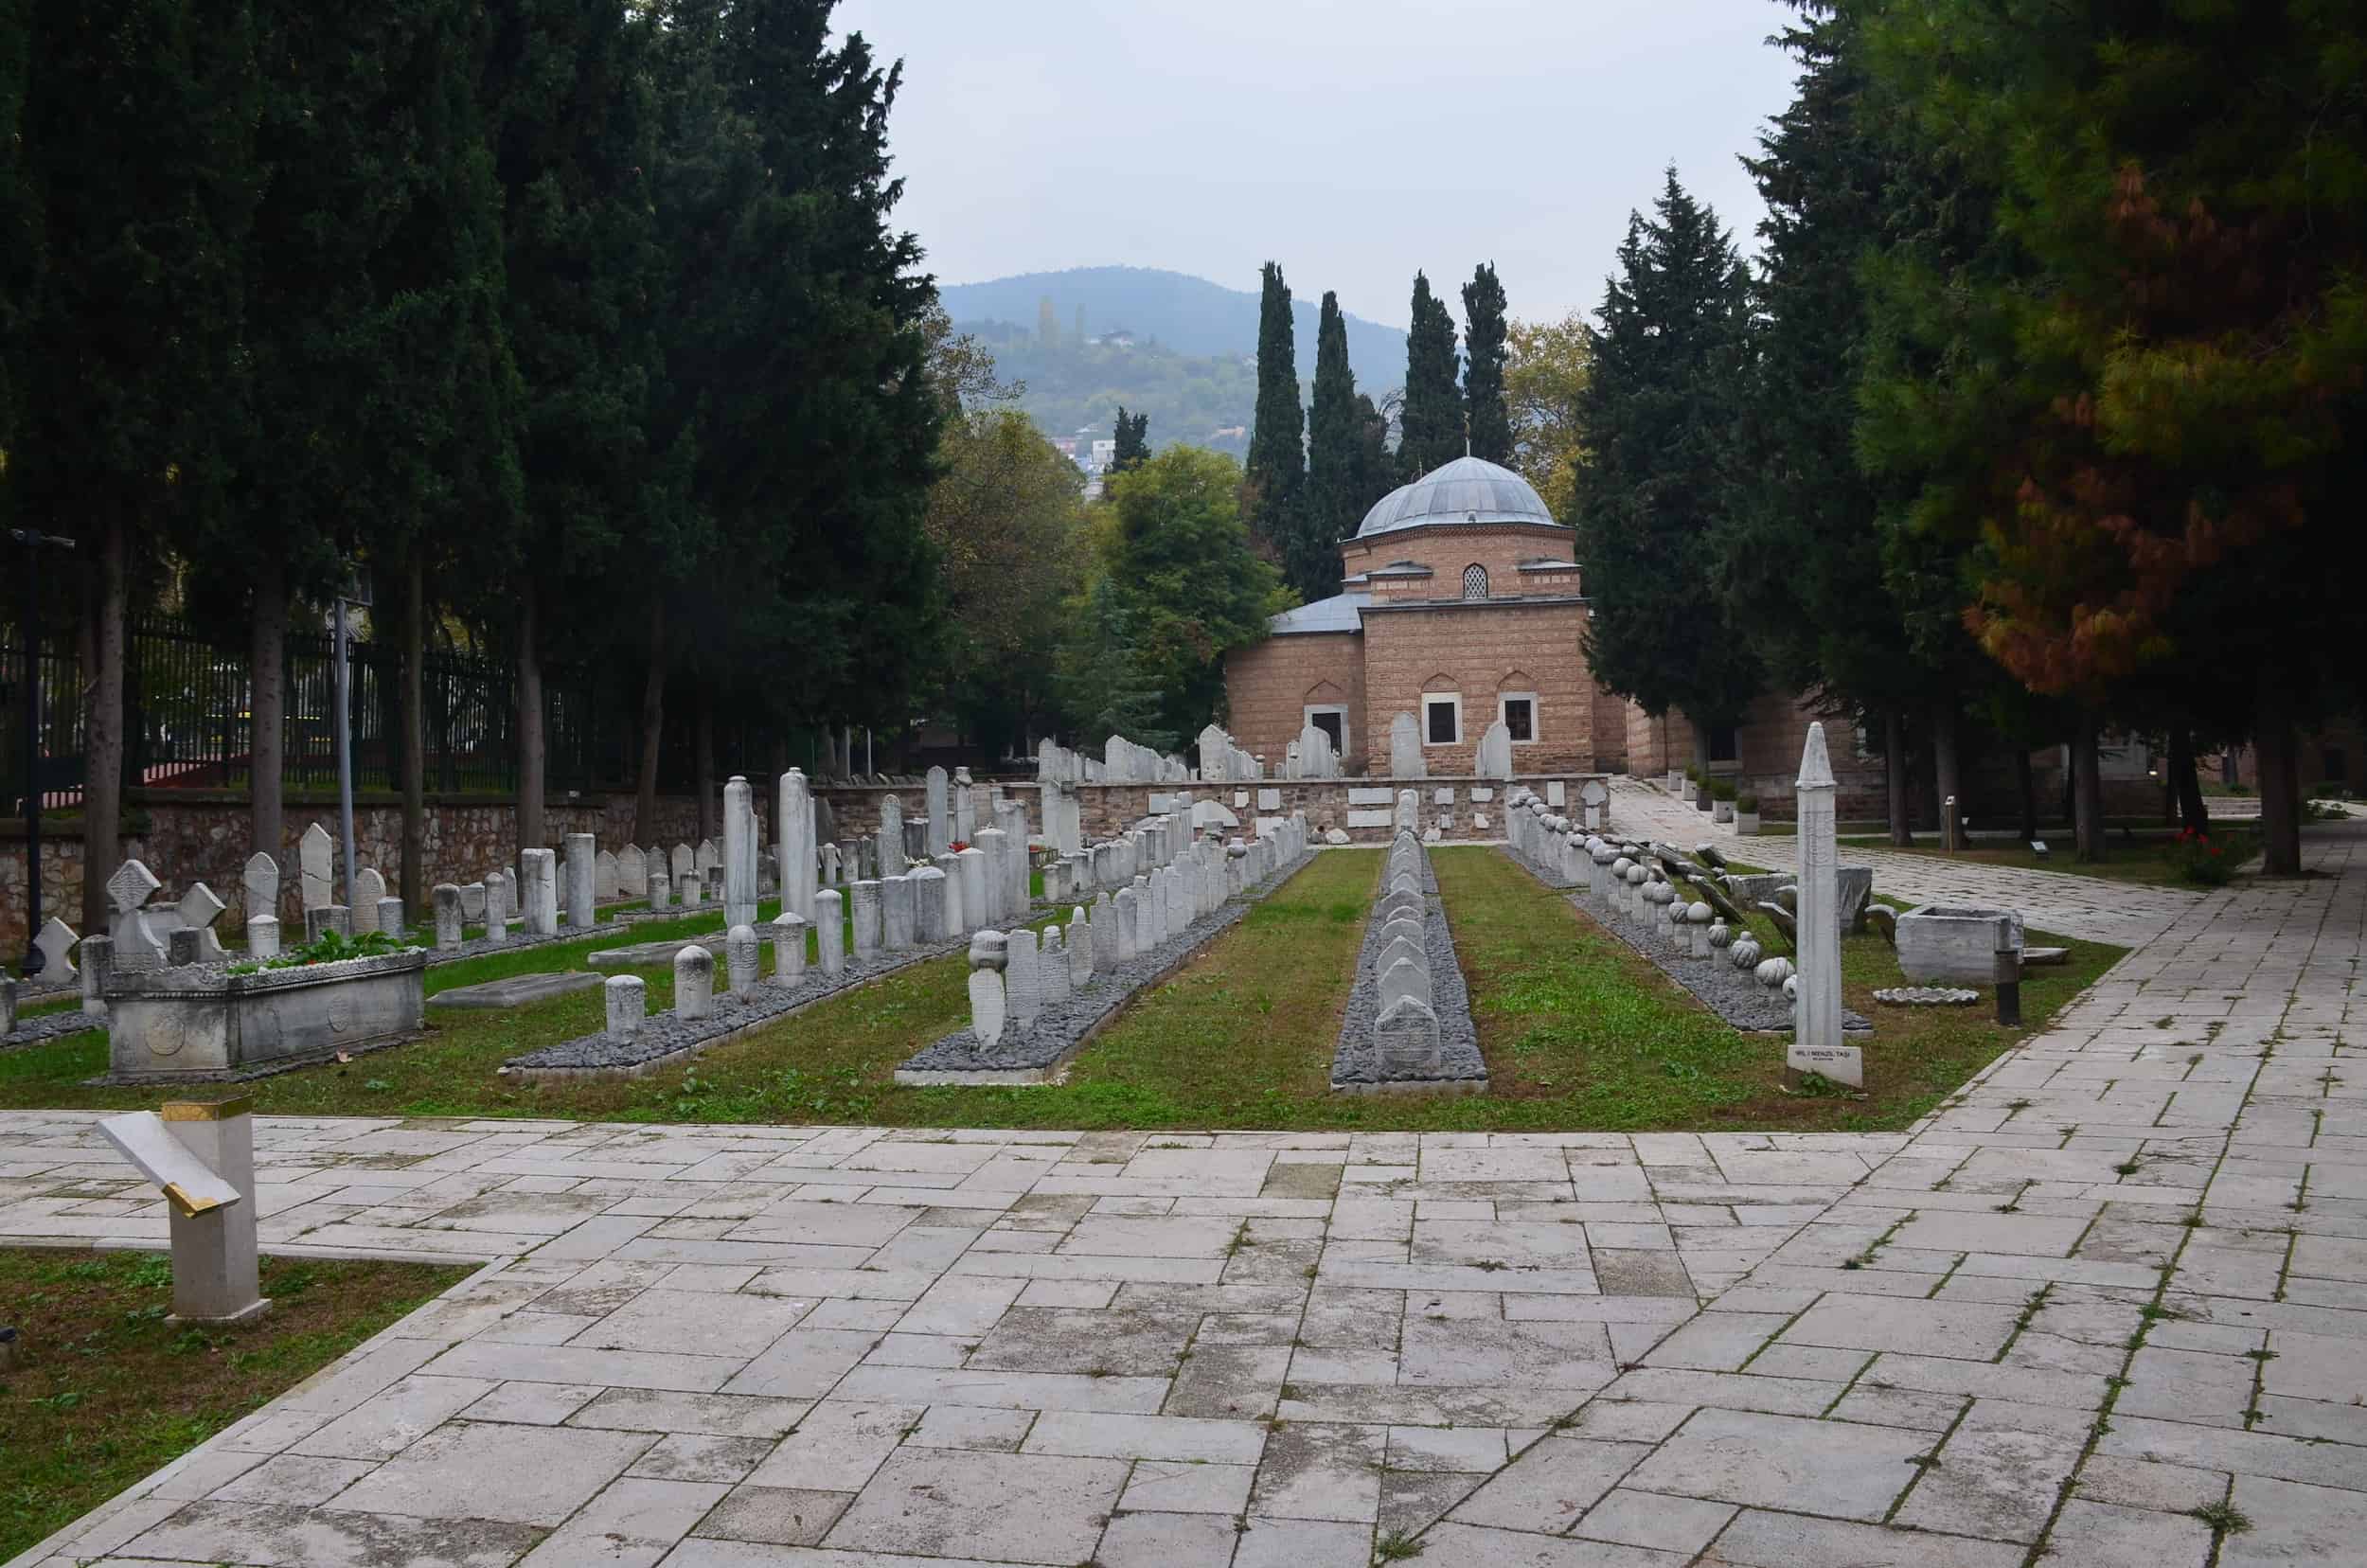 Tombstone exhibition at the Muradiye Complex in Bursa, Turkey